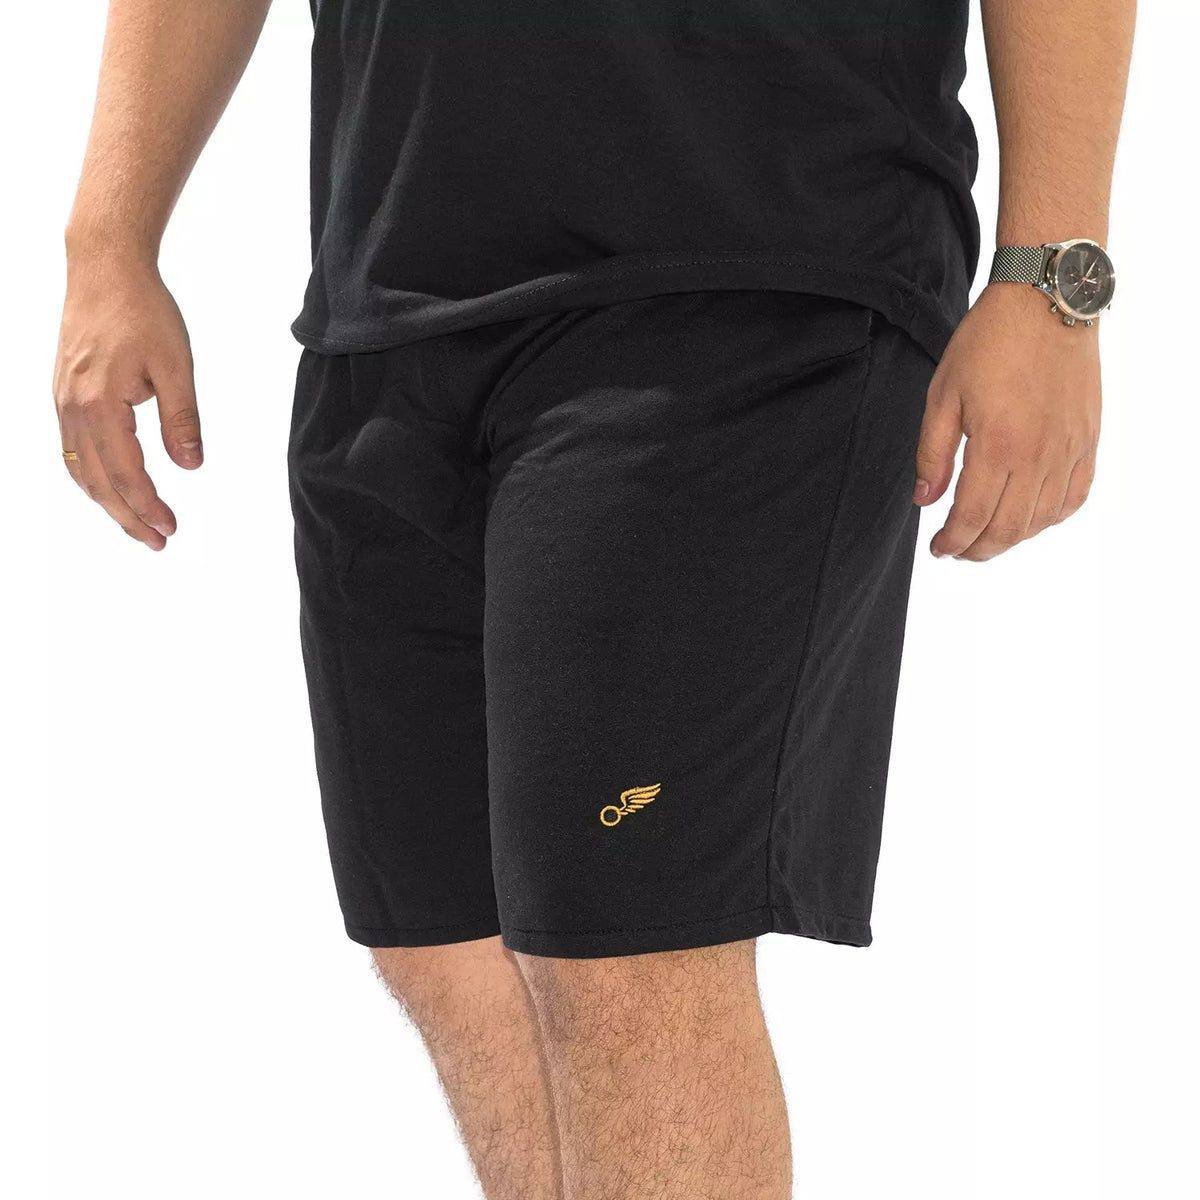 Kit Shorts / Bermuda Masculina para Esportes e Academia - Compre 1 Leve Outro MDM015 Kaypestore 